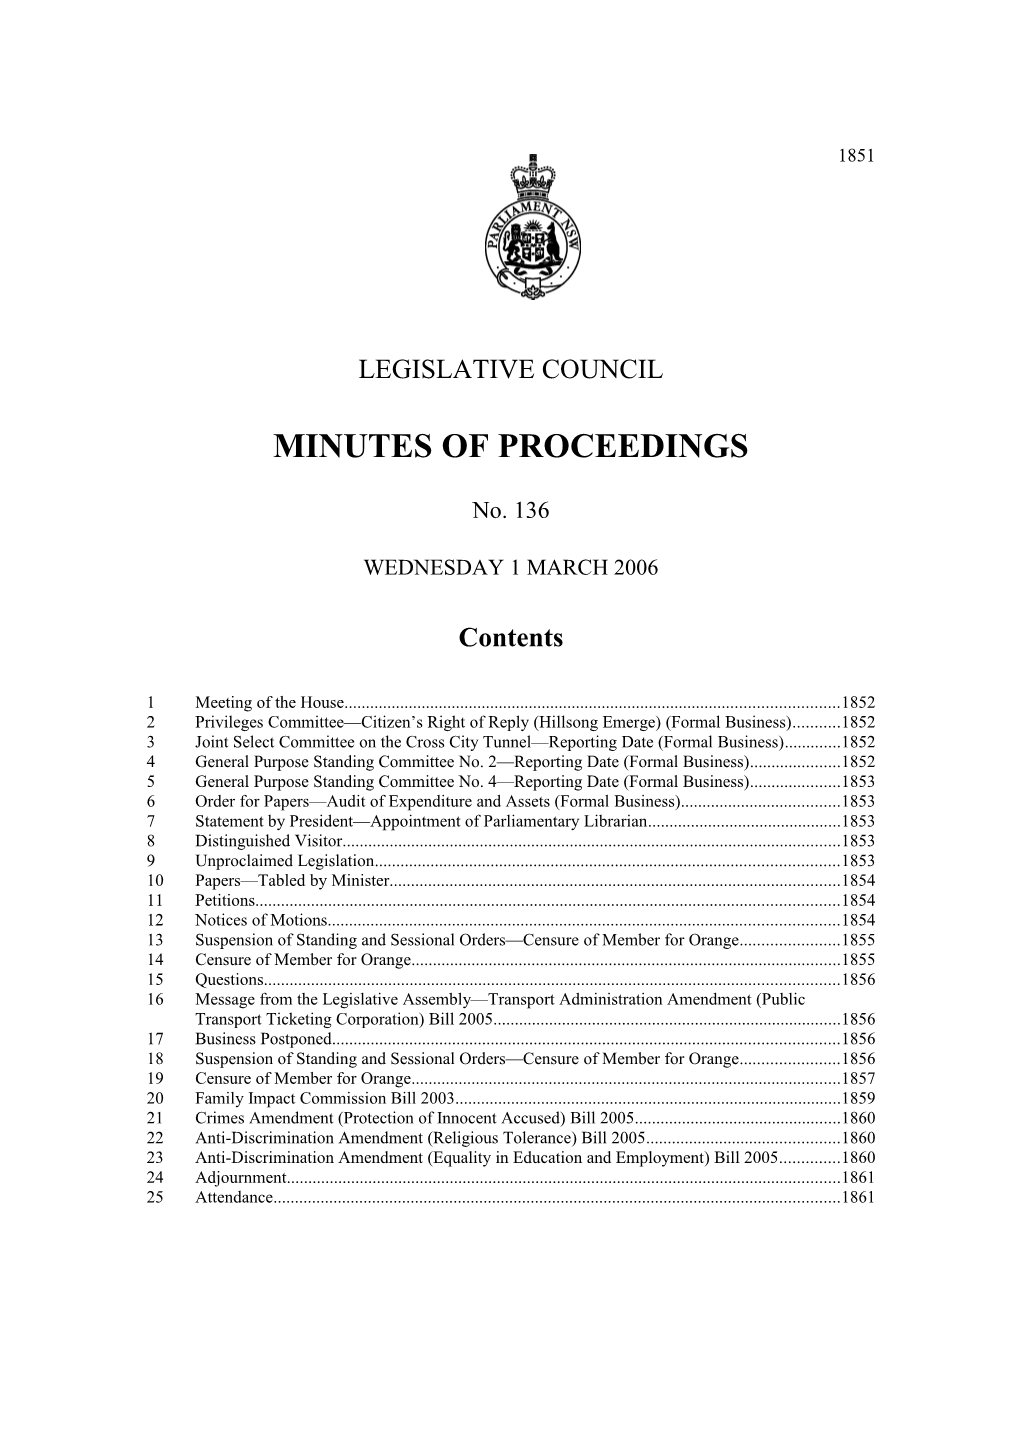 Legislative Council Minutes No. 136 Wednesday 1 March 2006